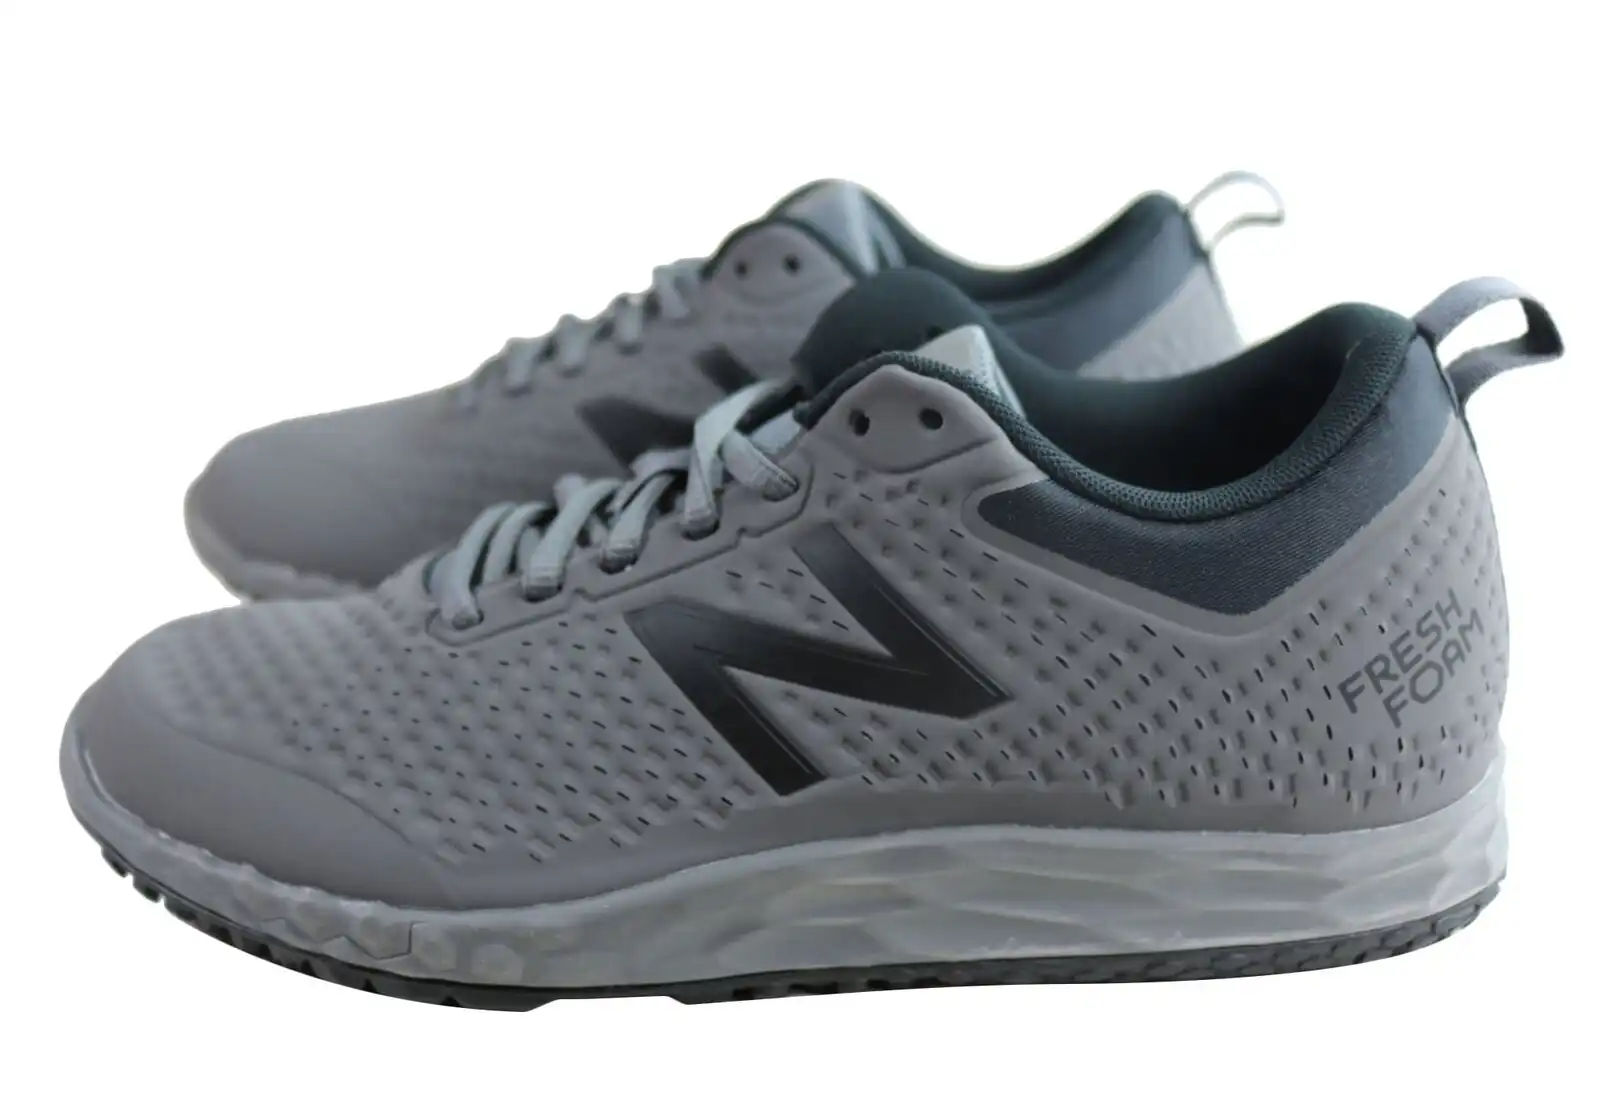 New Balance Men's Slip Resistant 2E Wide Fit Work Shoes - Grey/Black